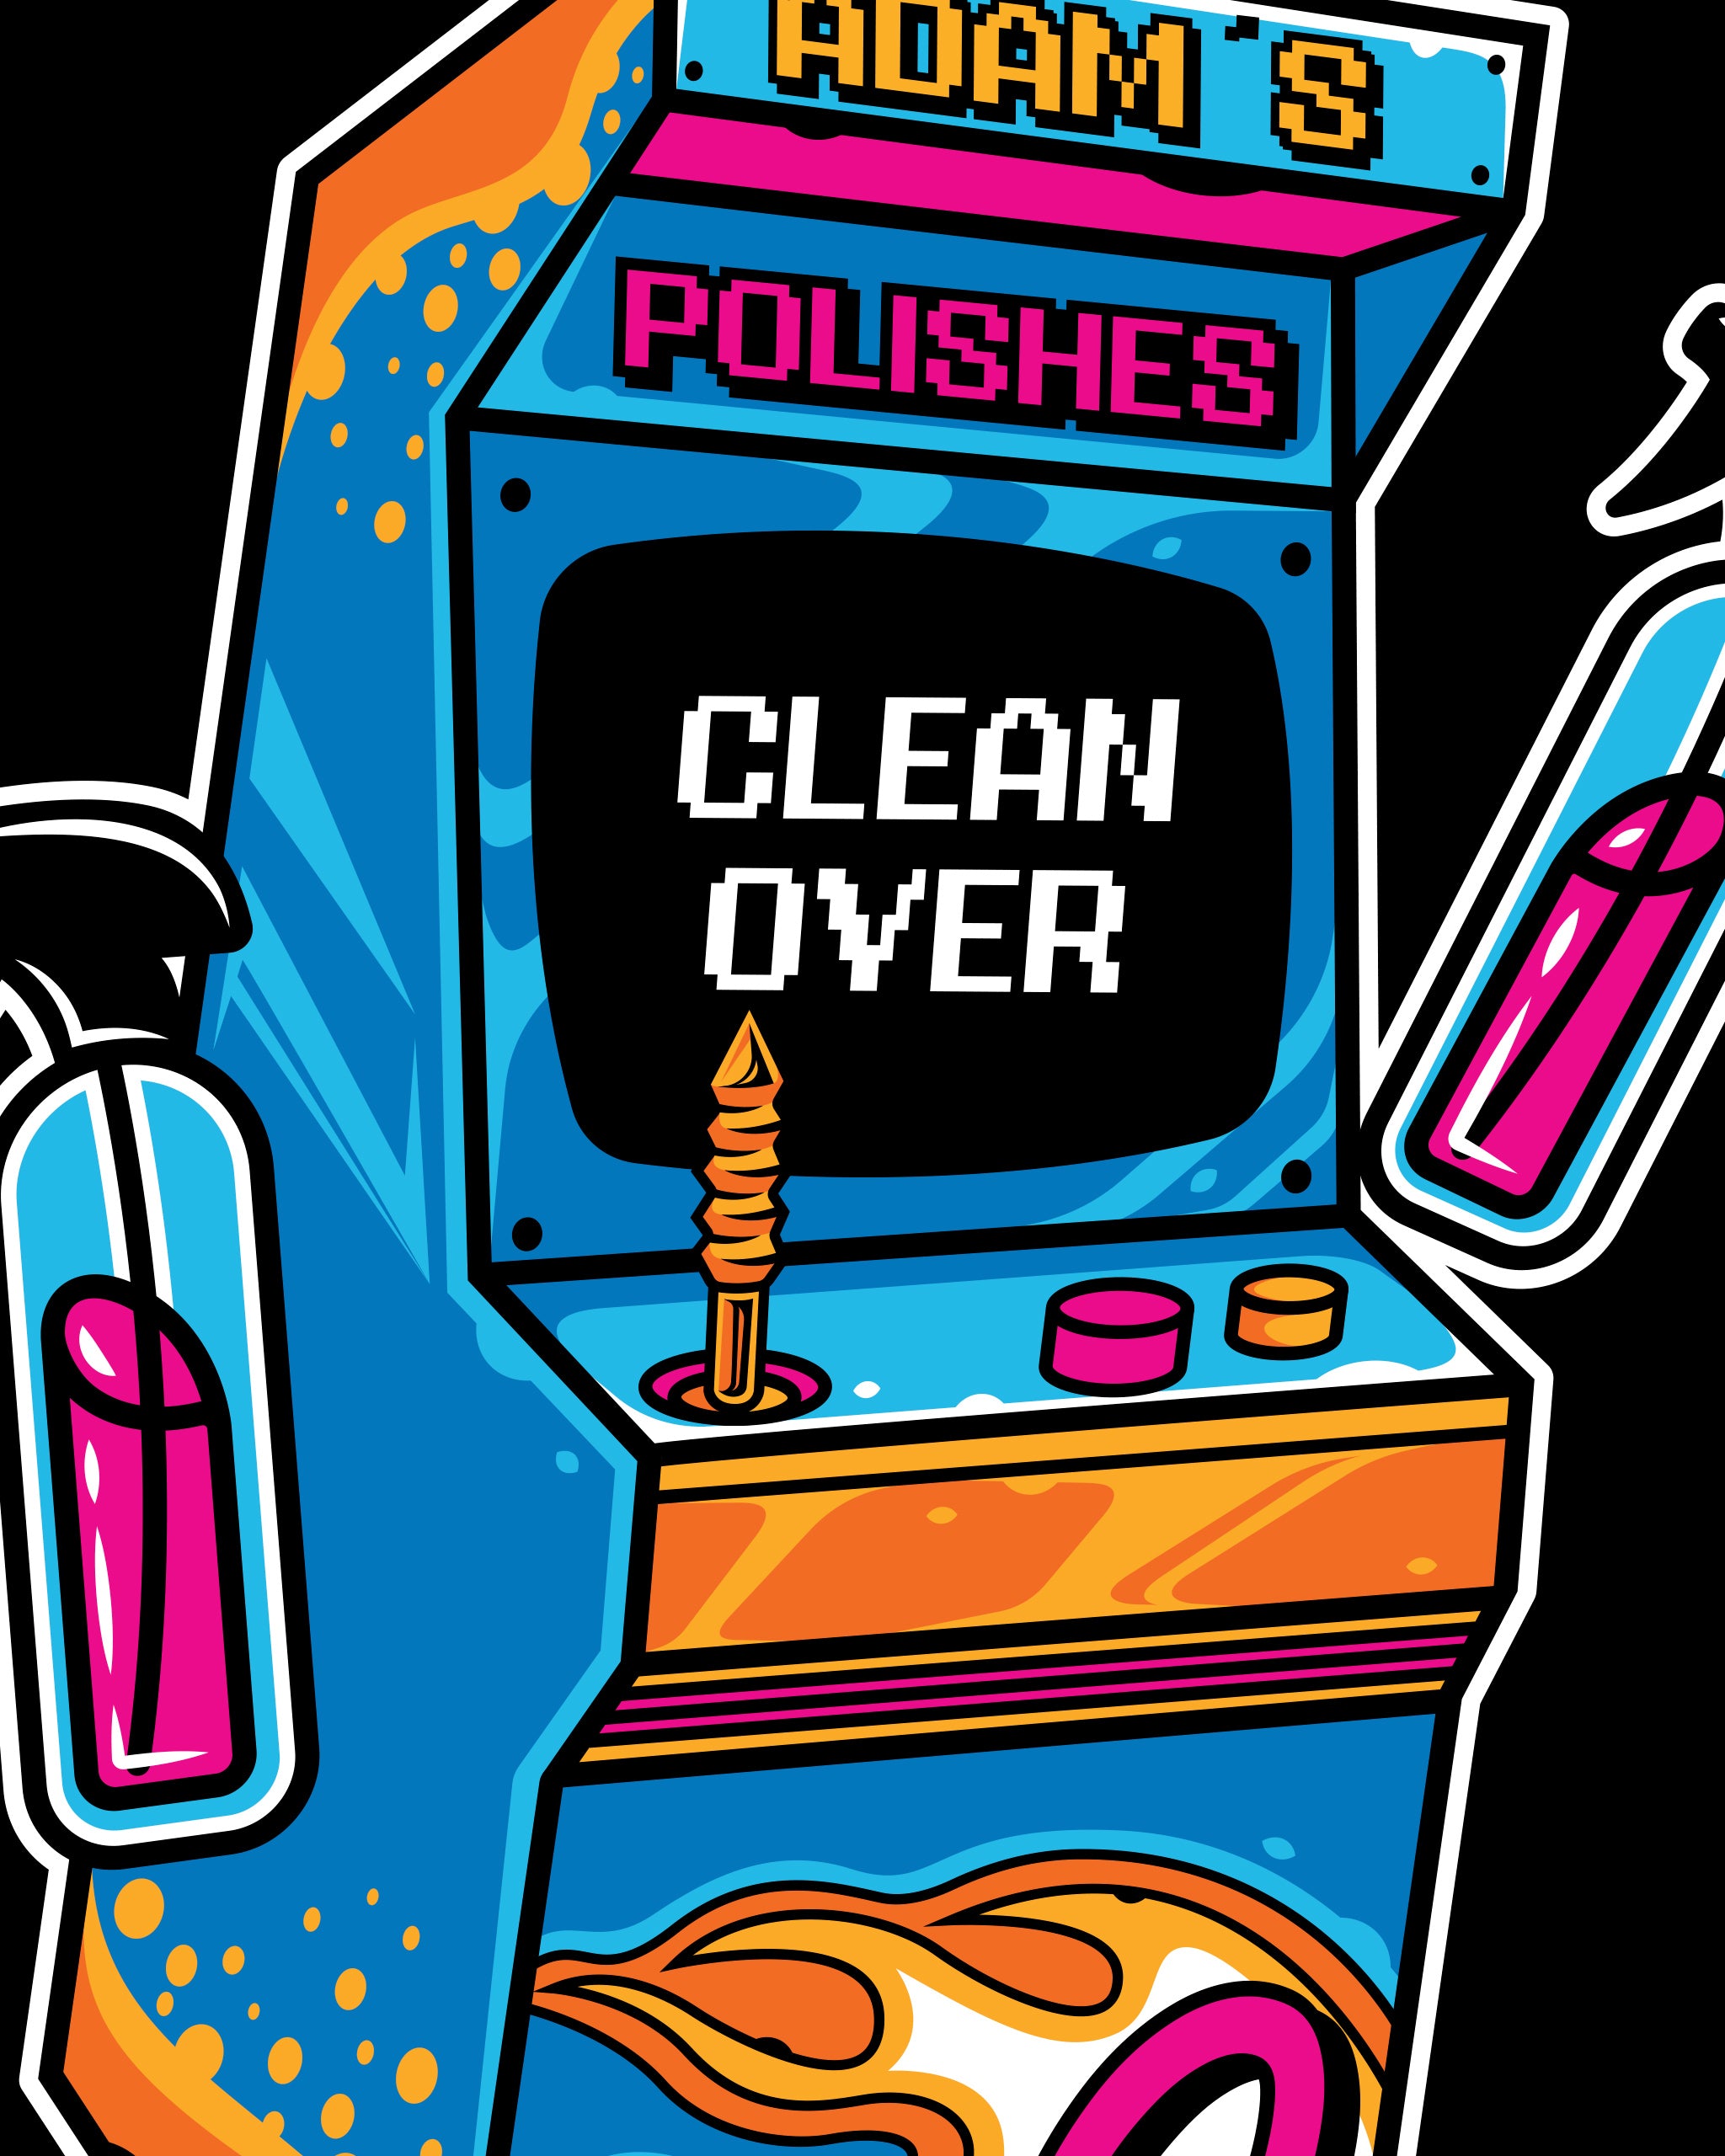 Adam's Clean Over Arcade Air Freshener